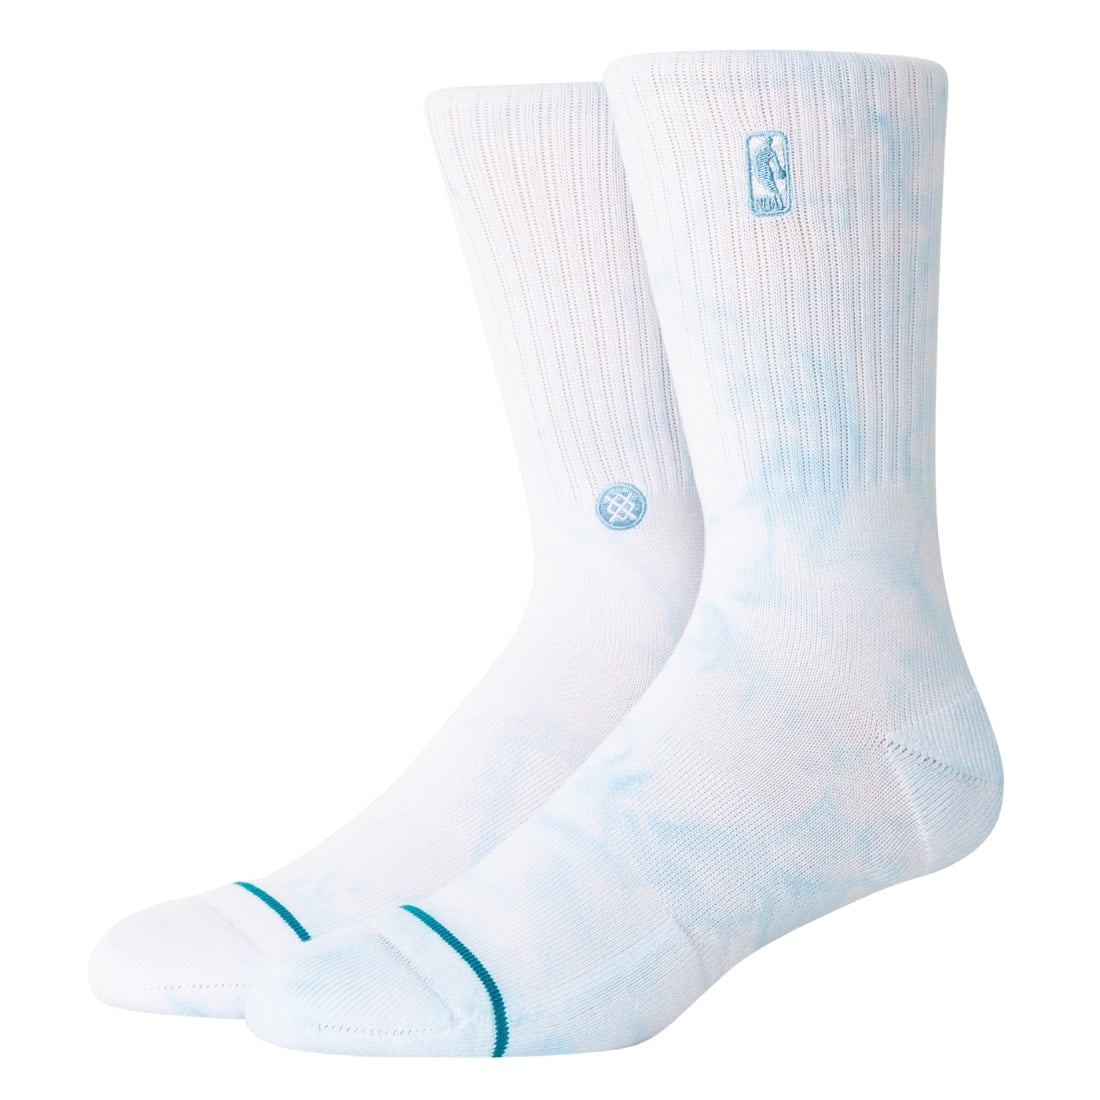 Stance NBA Logoman Dye Socks - Light Blue - Unisex Crew Length Socks by Stance